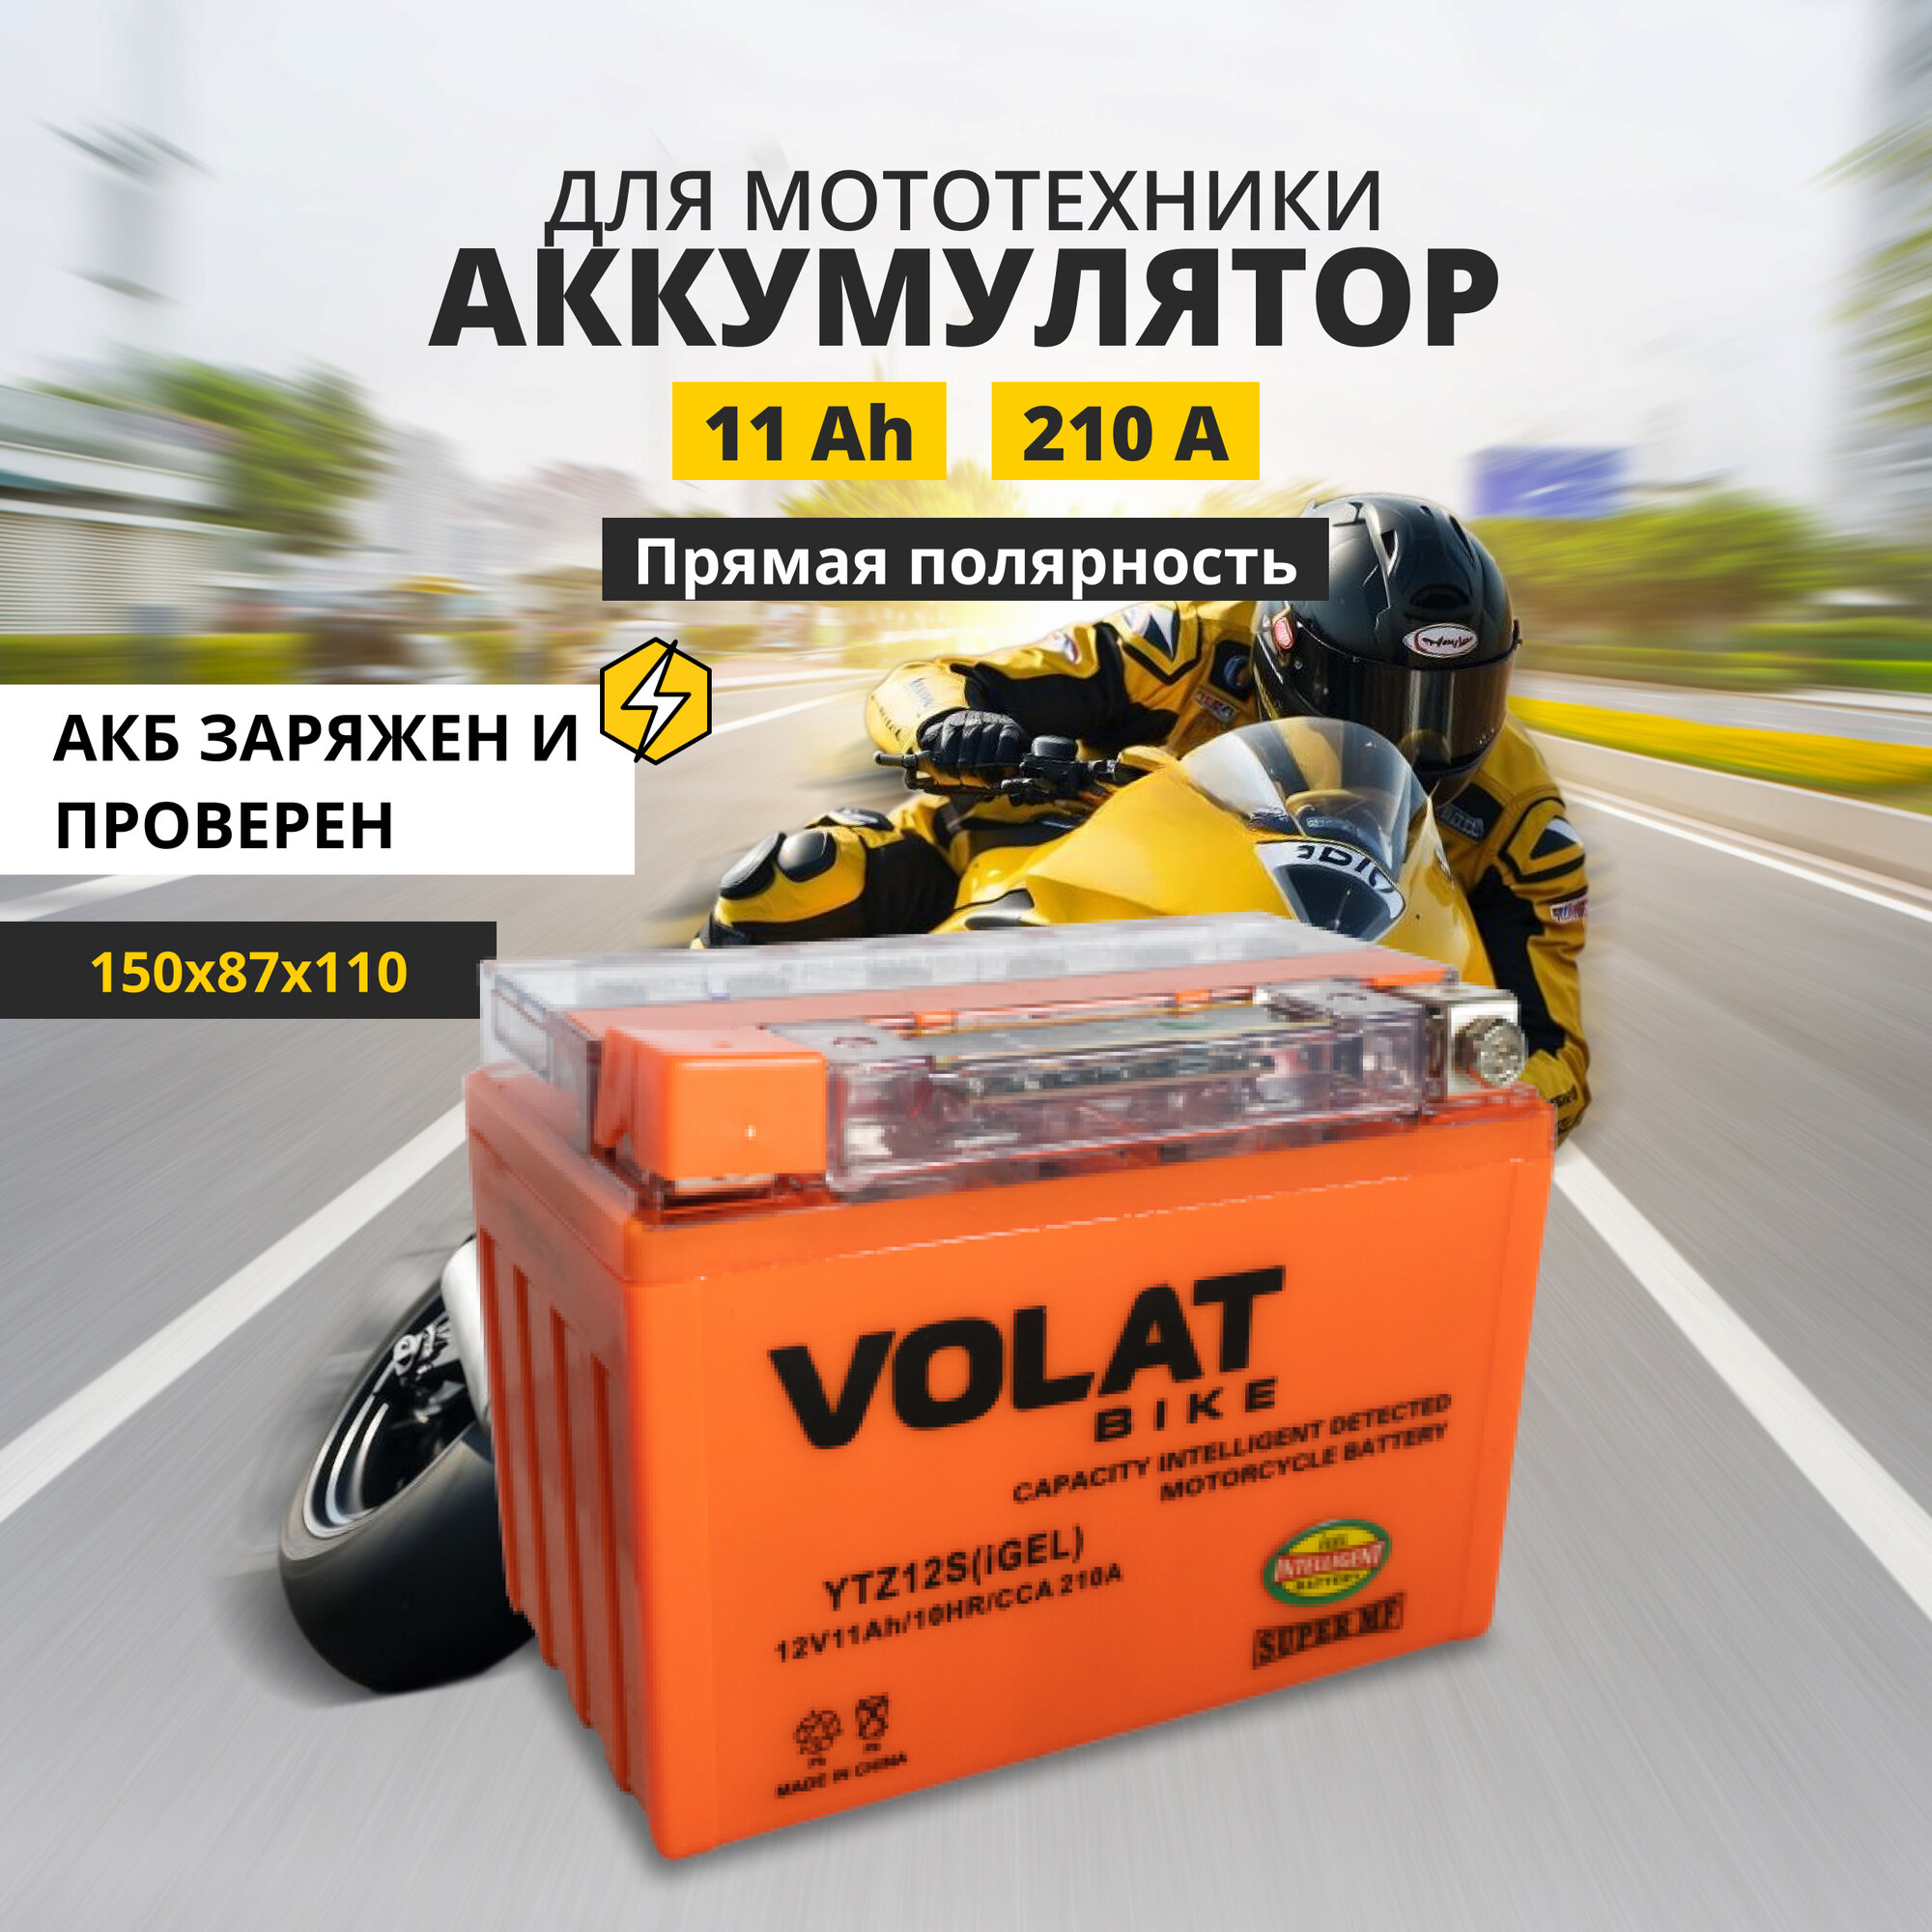 Аккумулятор для мотоцикла 12v Volat YTZ12S(iGEL) прямая полярность 11 Ah 210 A гелевый, акб на скутер, мопед, квадроцикл 150x87x110 мм